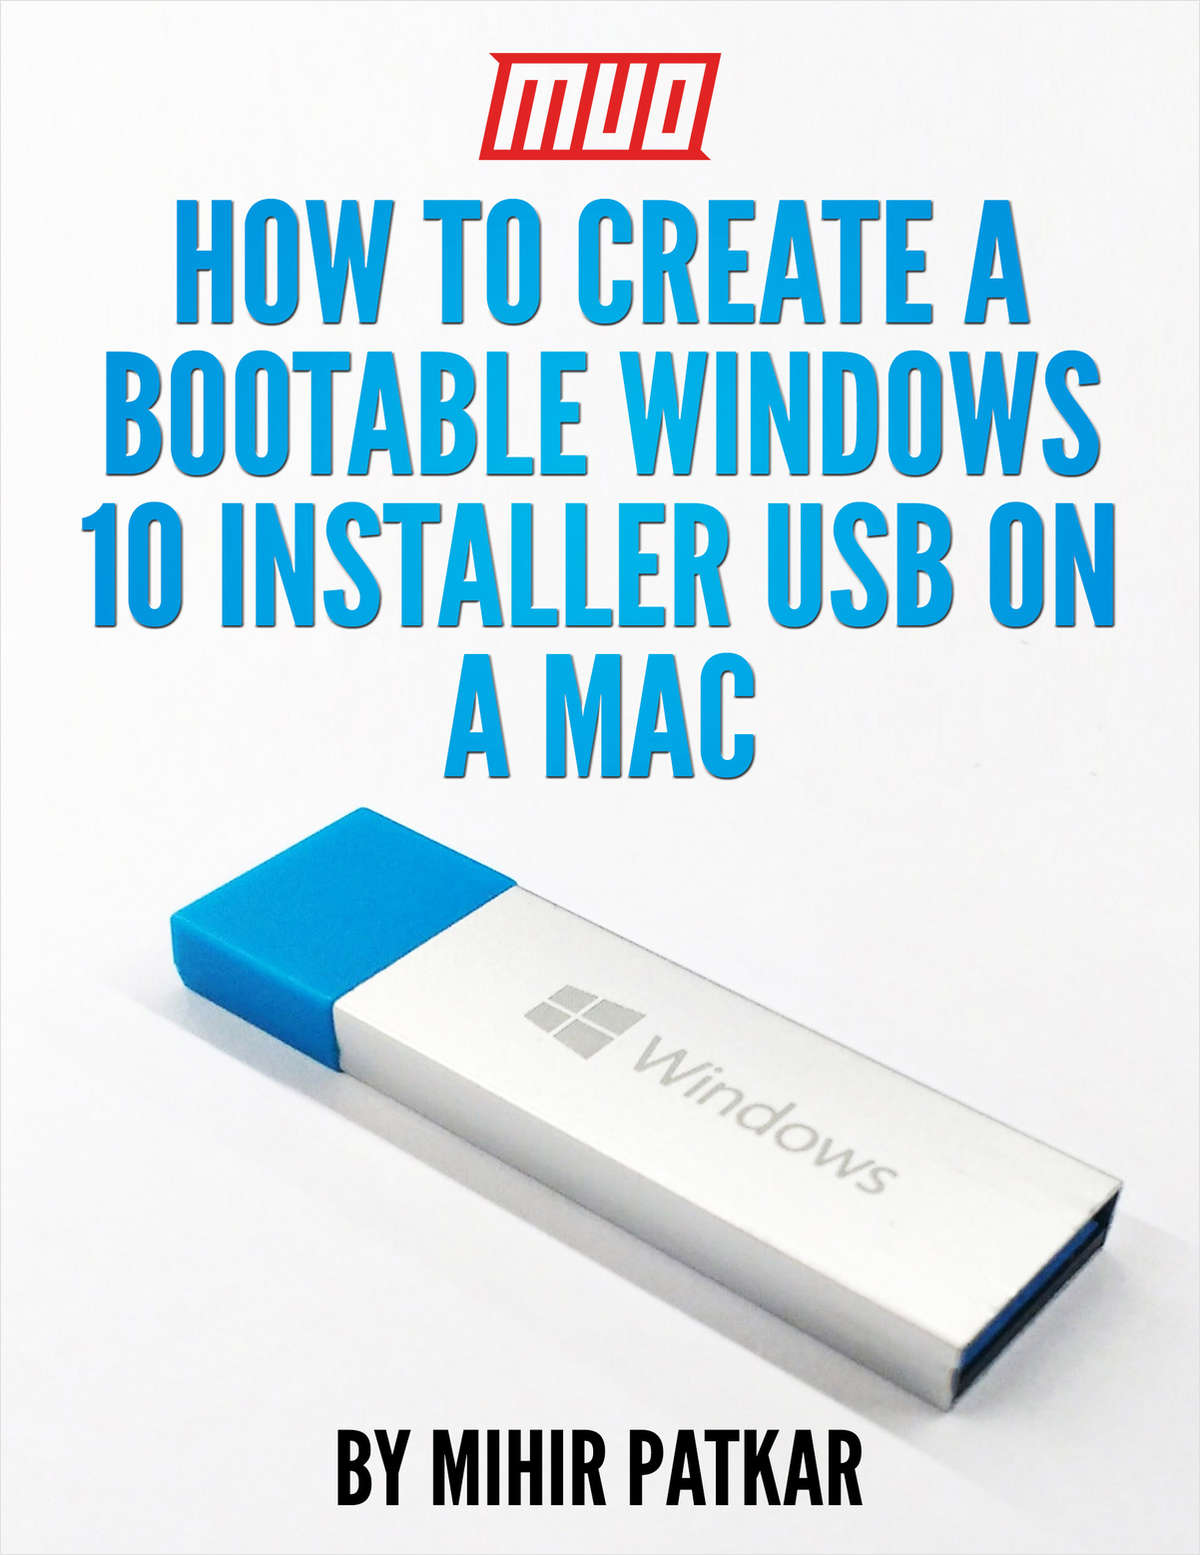 Windows 10 usb bootable